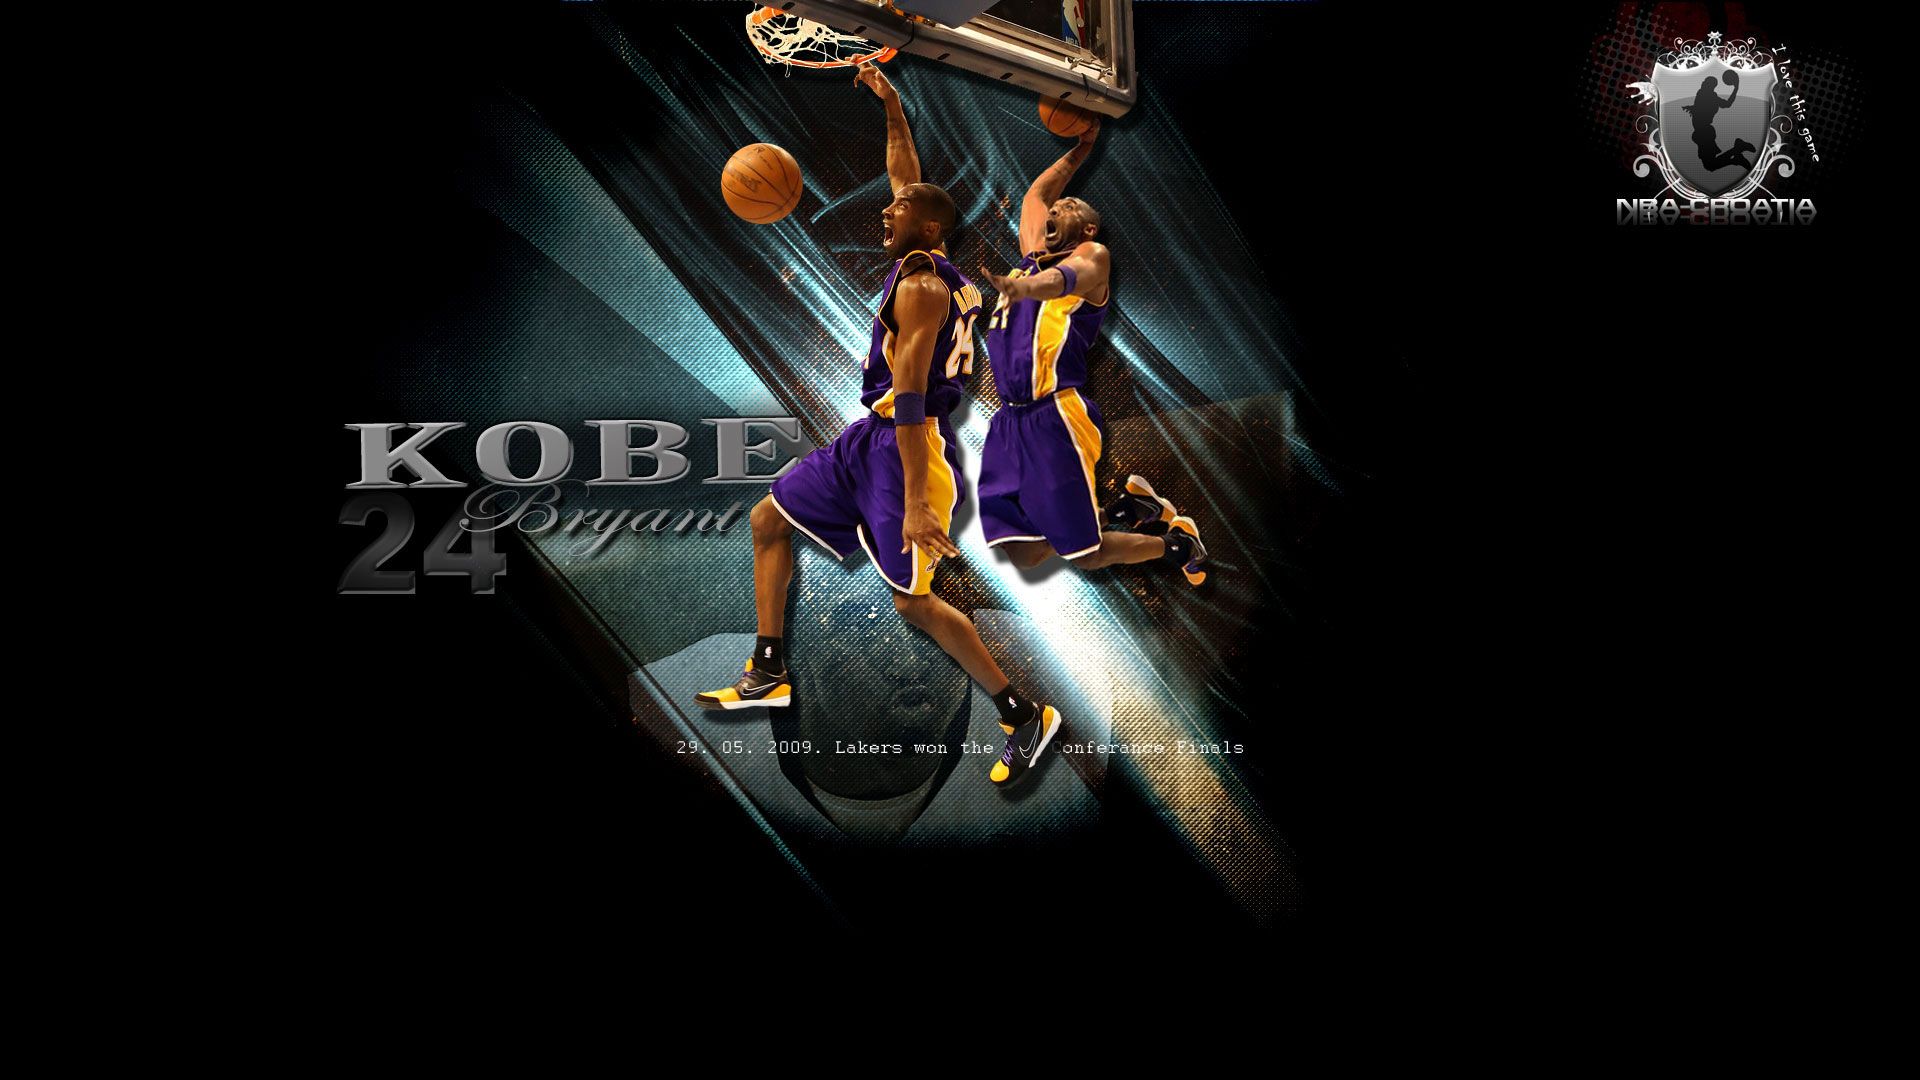 Kobe Bryant 1080p Wallpaper Picture Image